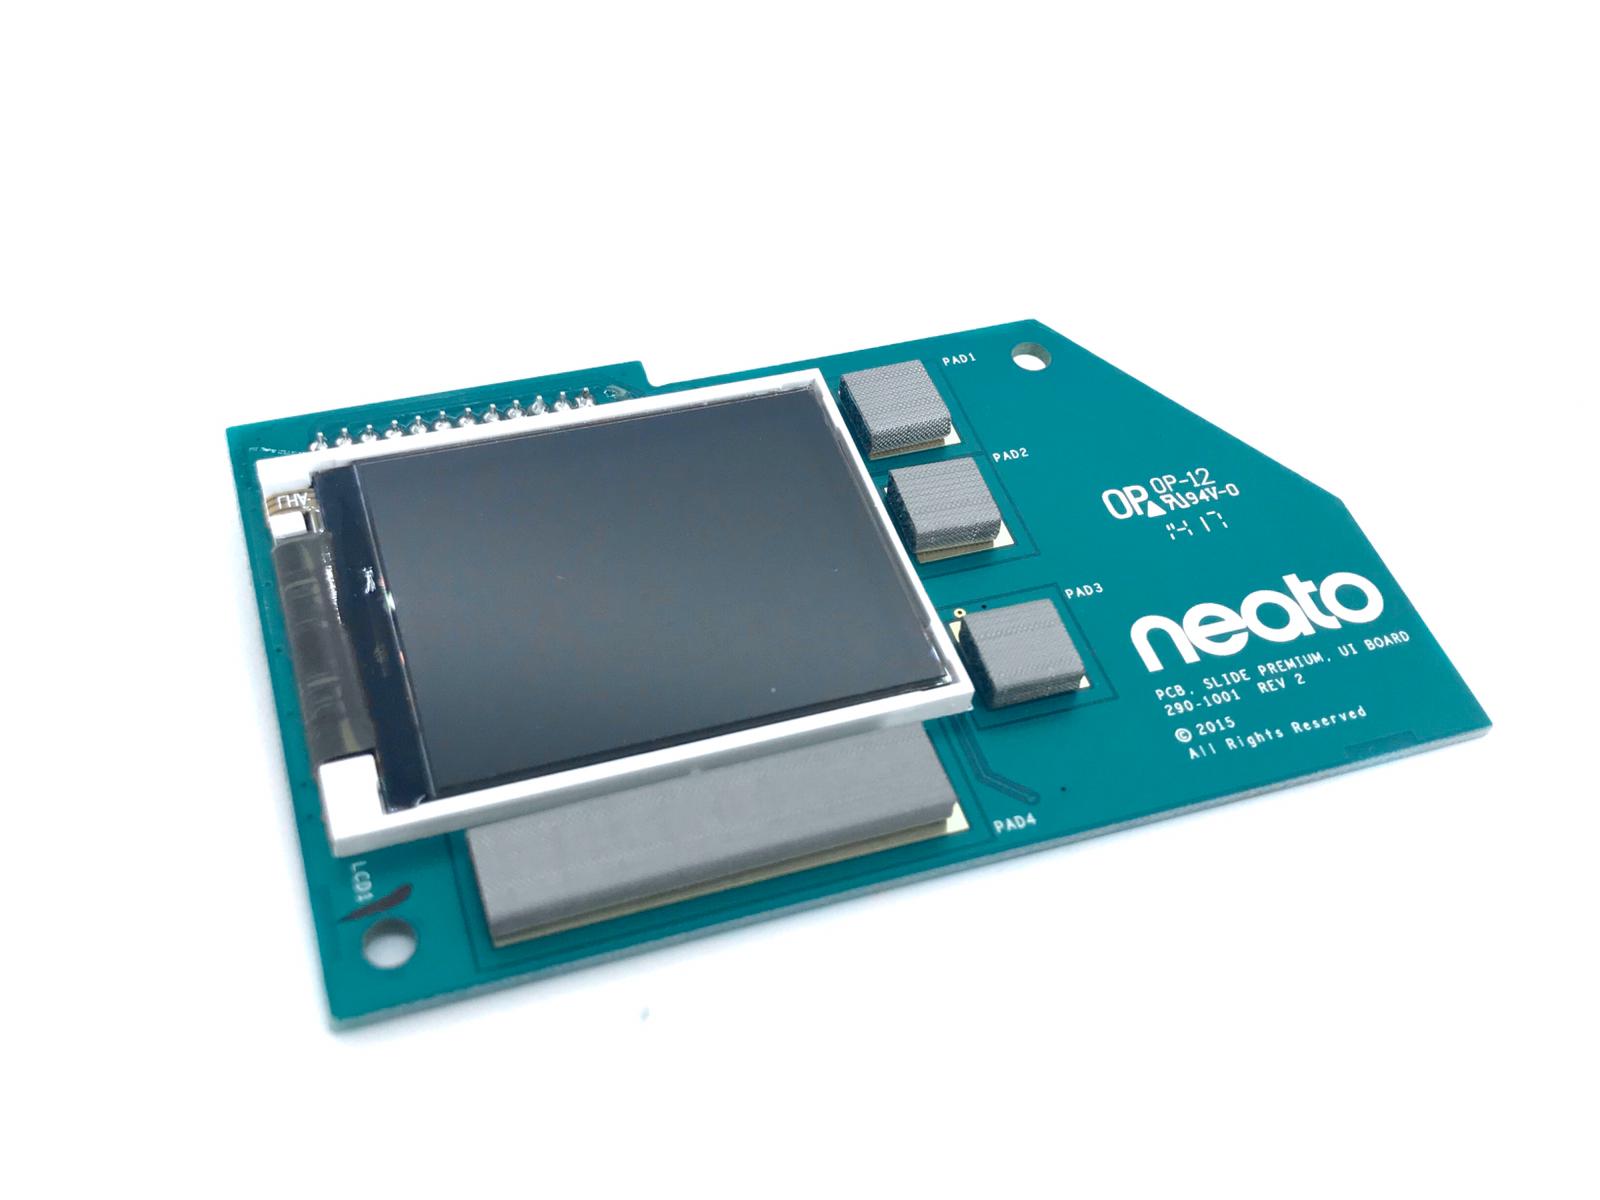 Display Board Neato Botvac D Series